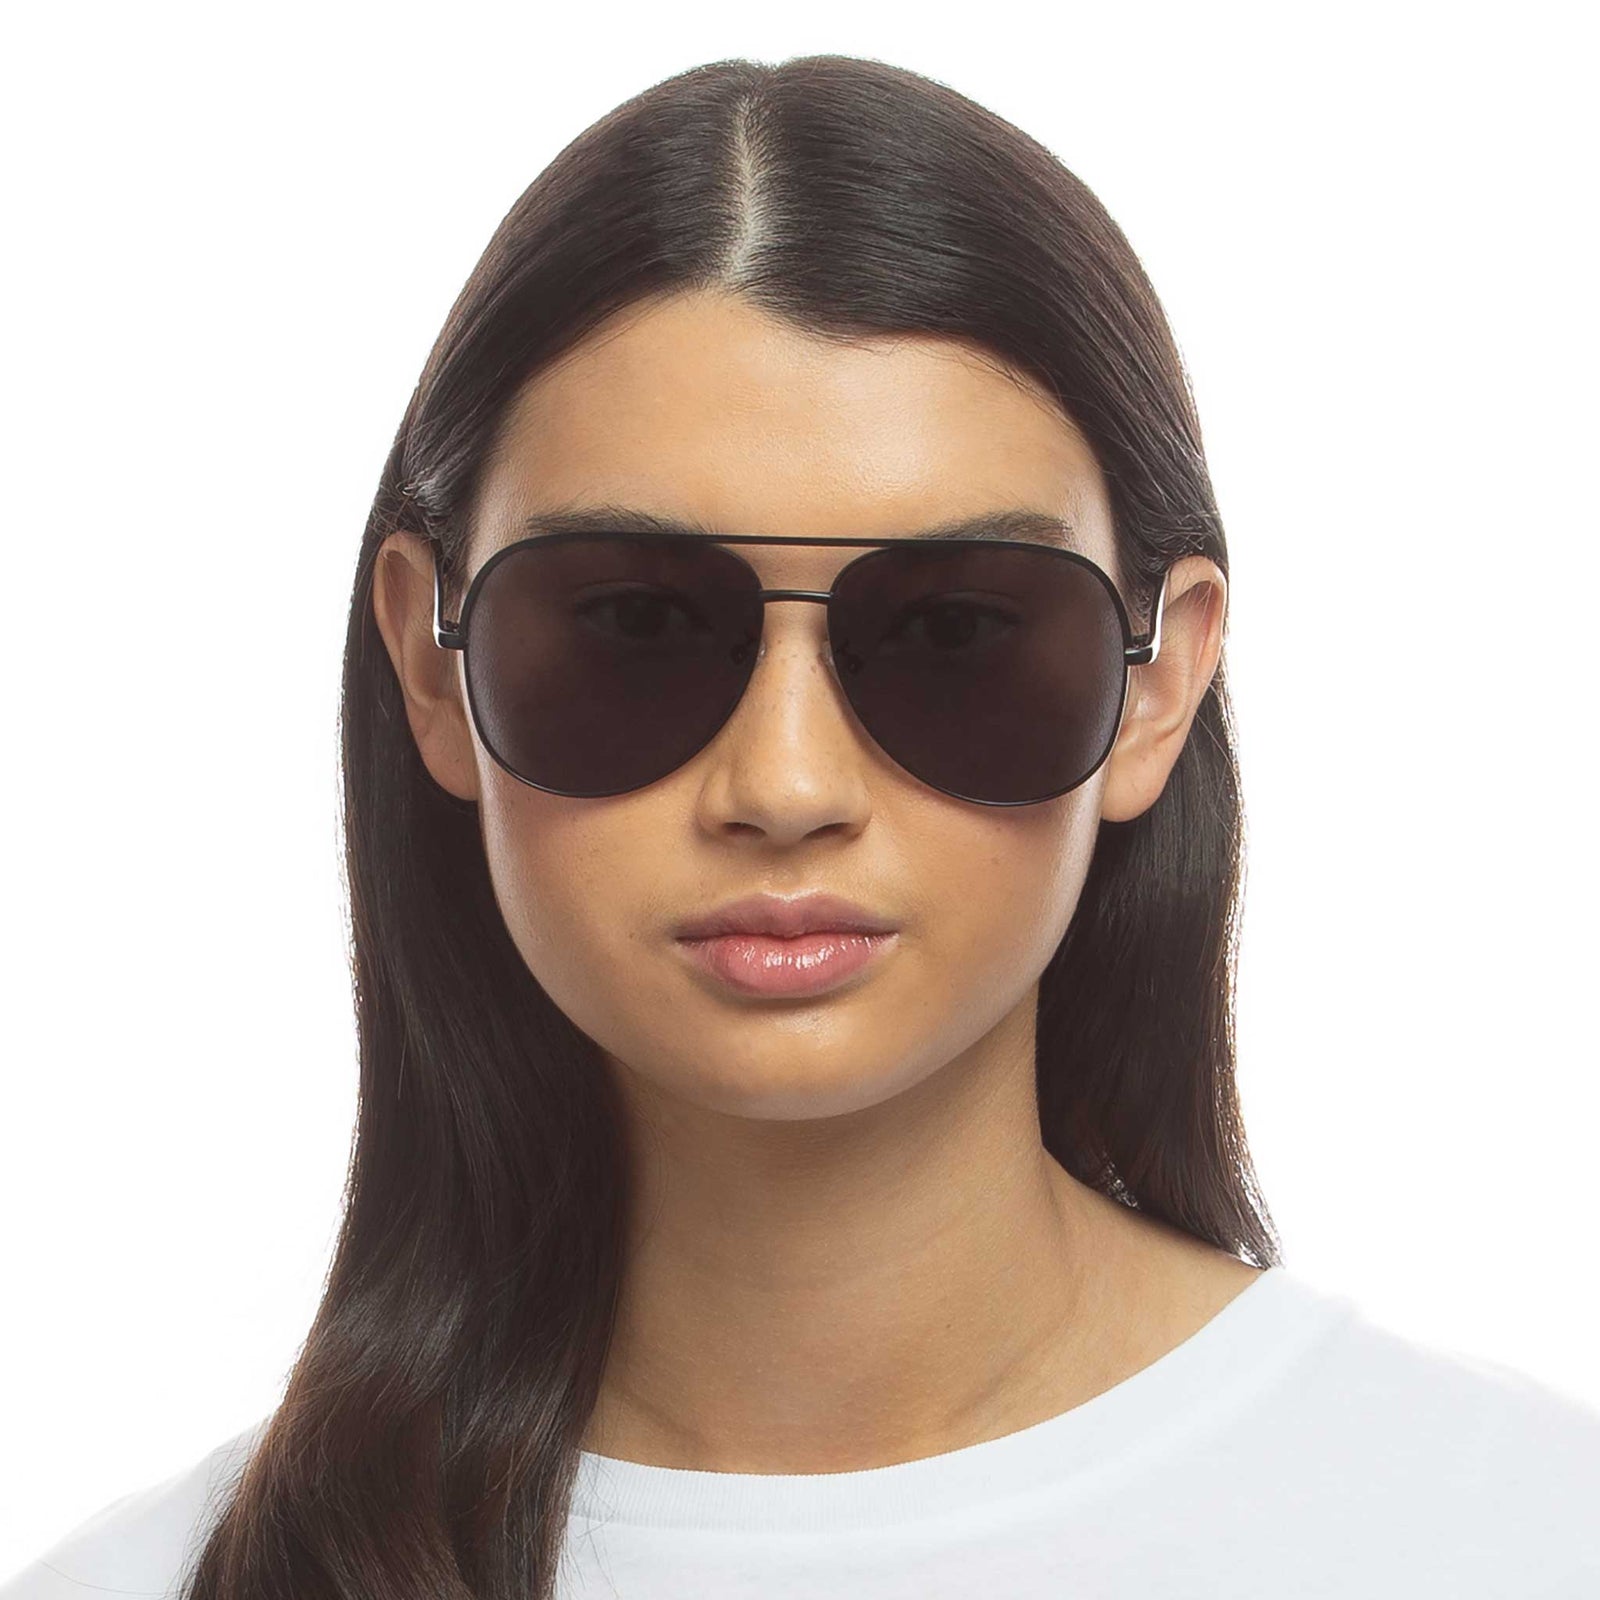 Pilot Sunglasses | Women Sunglasses - Black Gradient Sunglasses Women Brand  Designer - Aliexpress